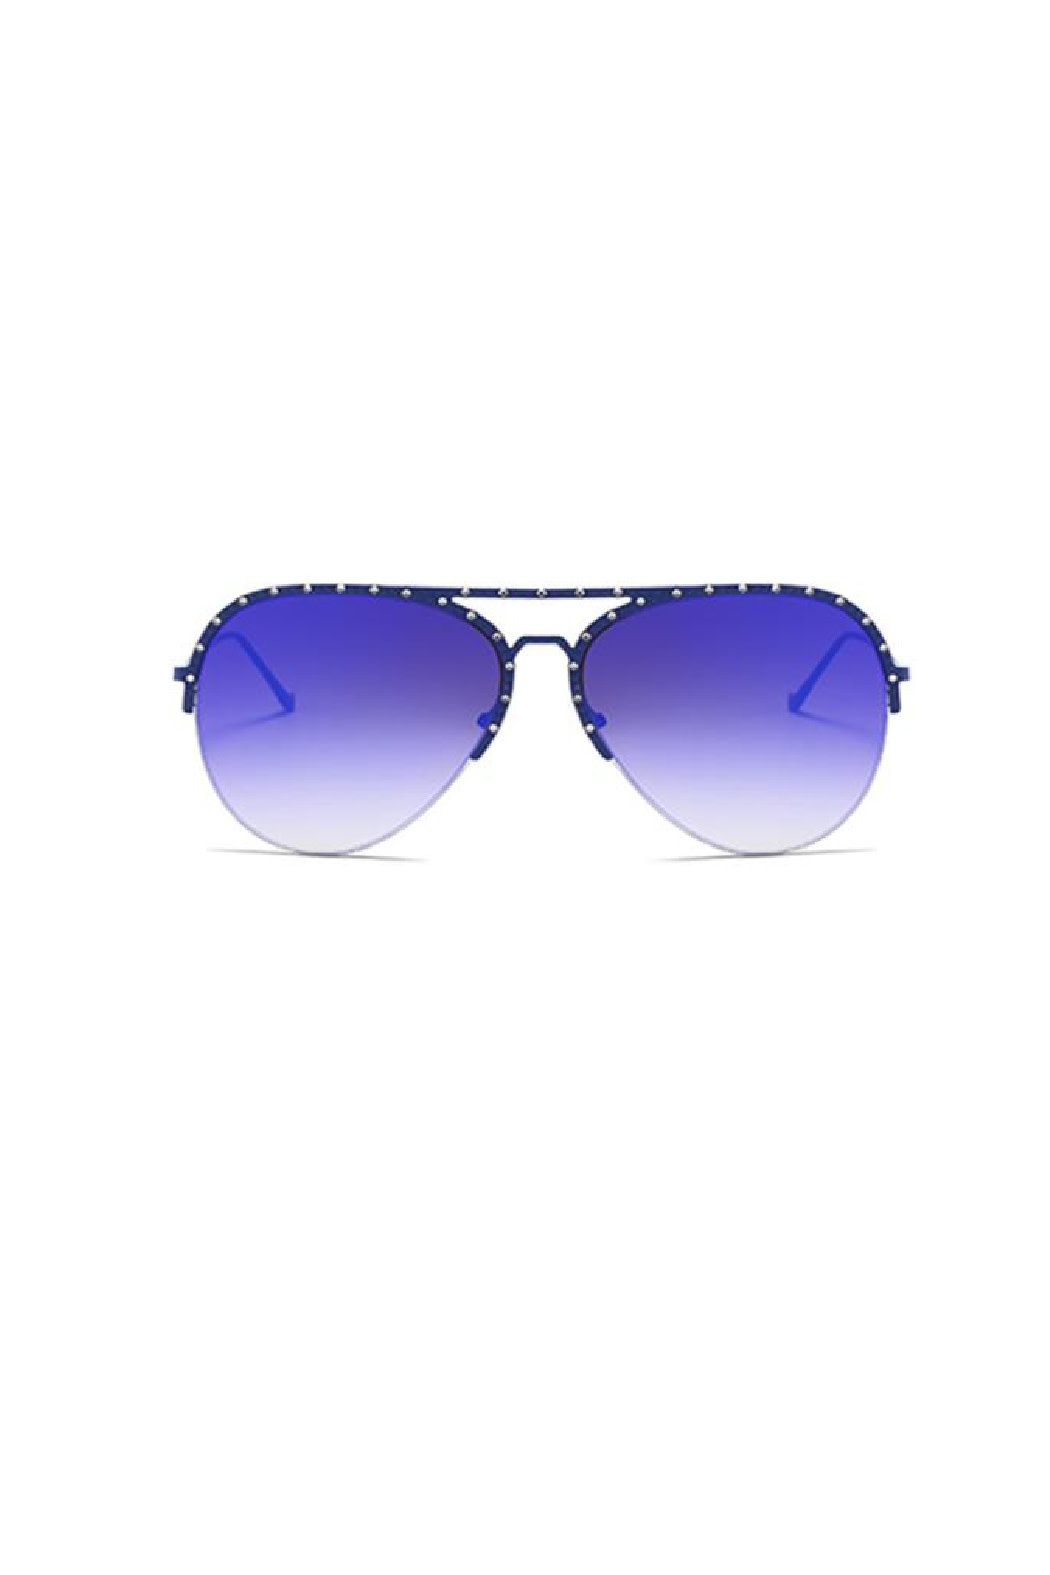 Trend Boutique Aviator Studded Sunglasses